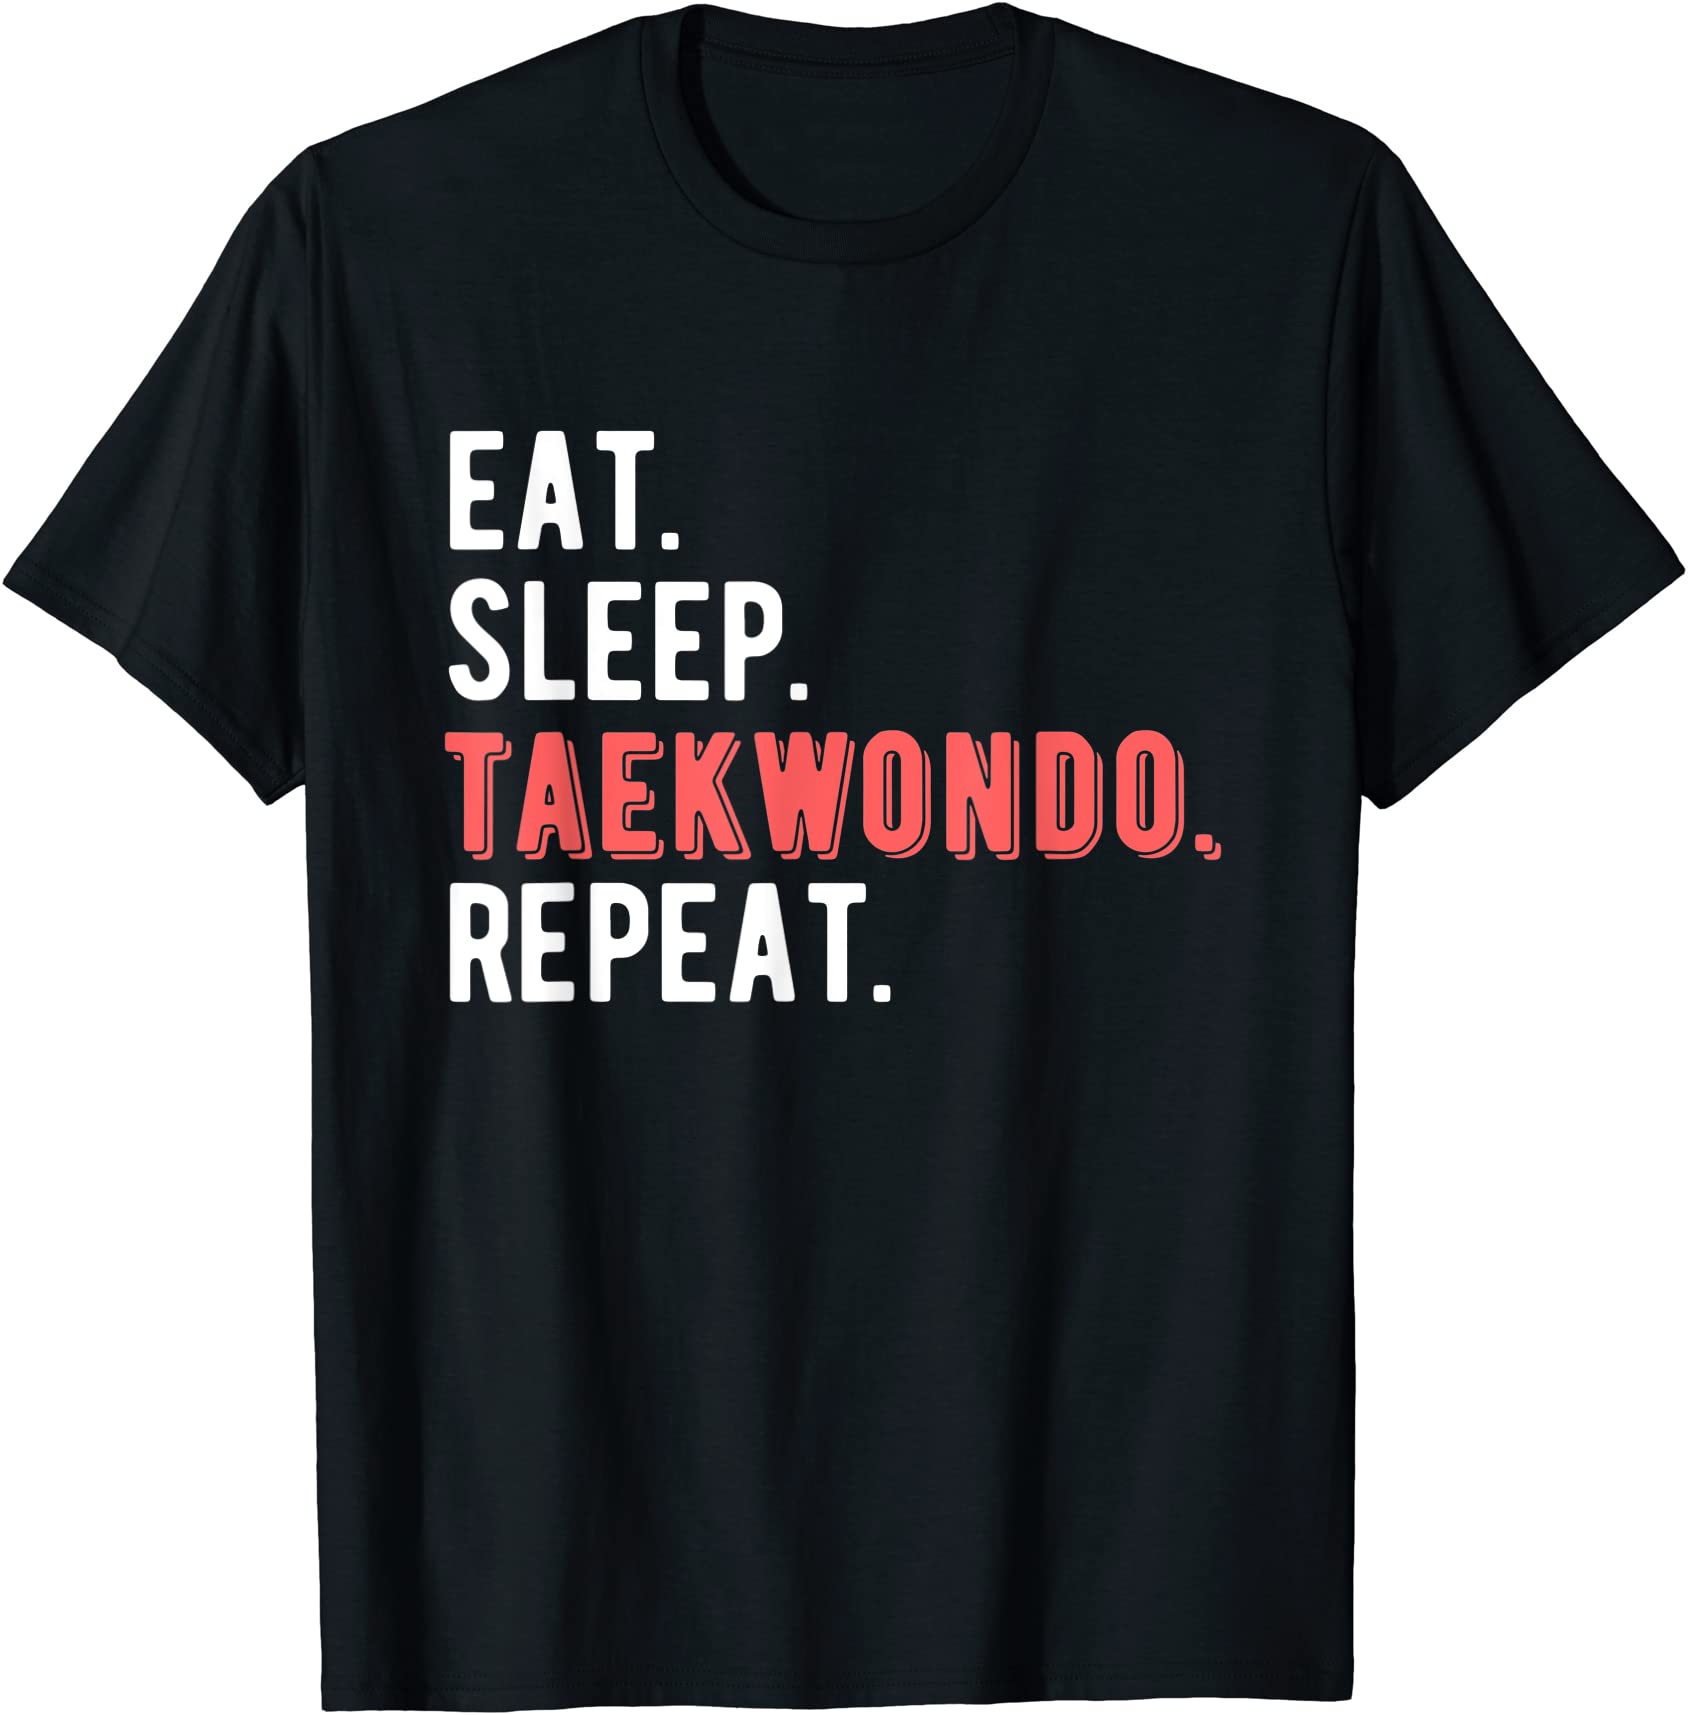 eat sleep taekwondo repeat lover cool funny t shirt men - Buy t-shirt ...